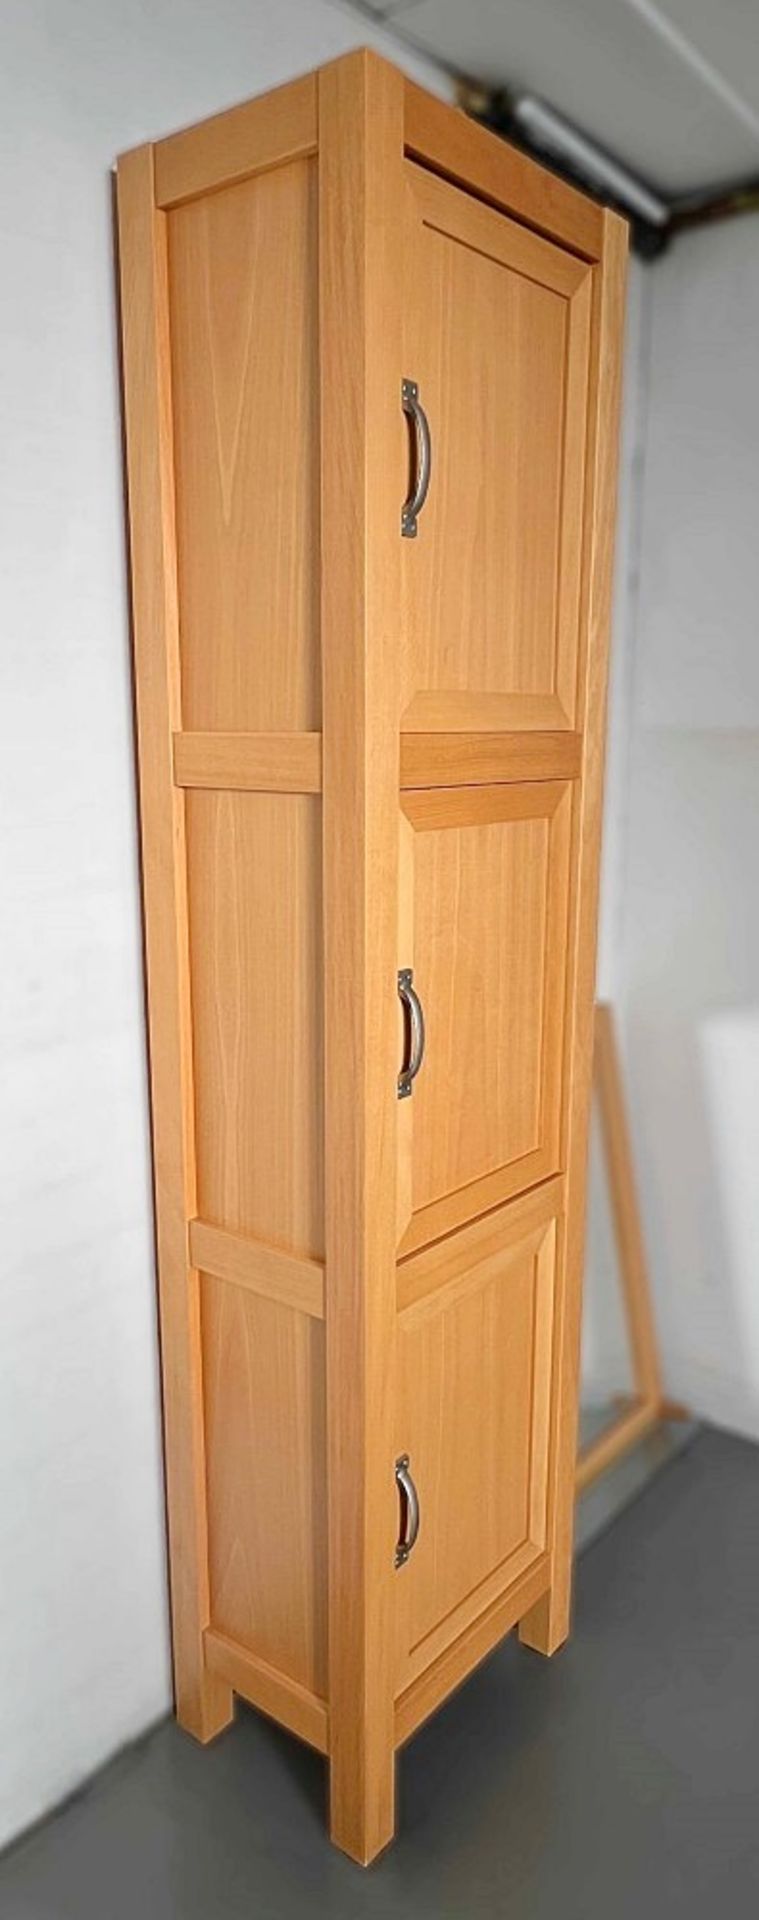 1 x VILLEROY & BOCH 3-Door Tallboy Bathroom Storage Cabinet With Matching Mirror - NO VAT ON THE - Image 4 of 5